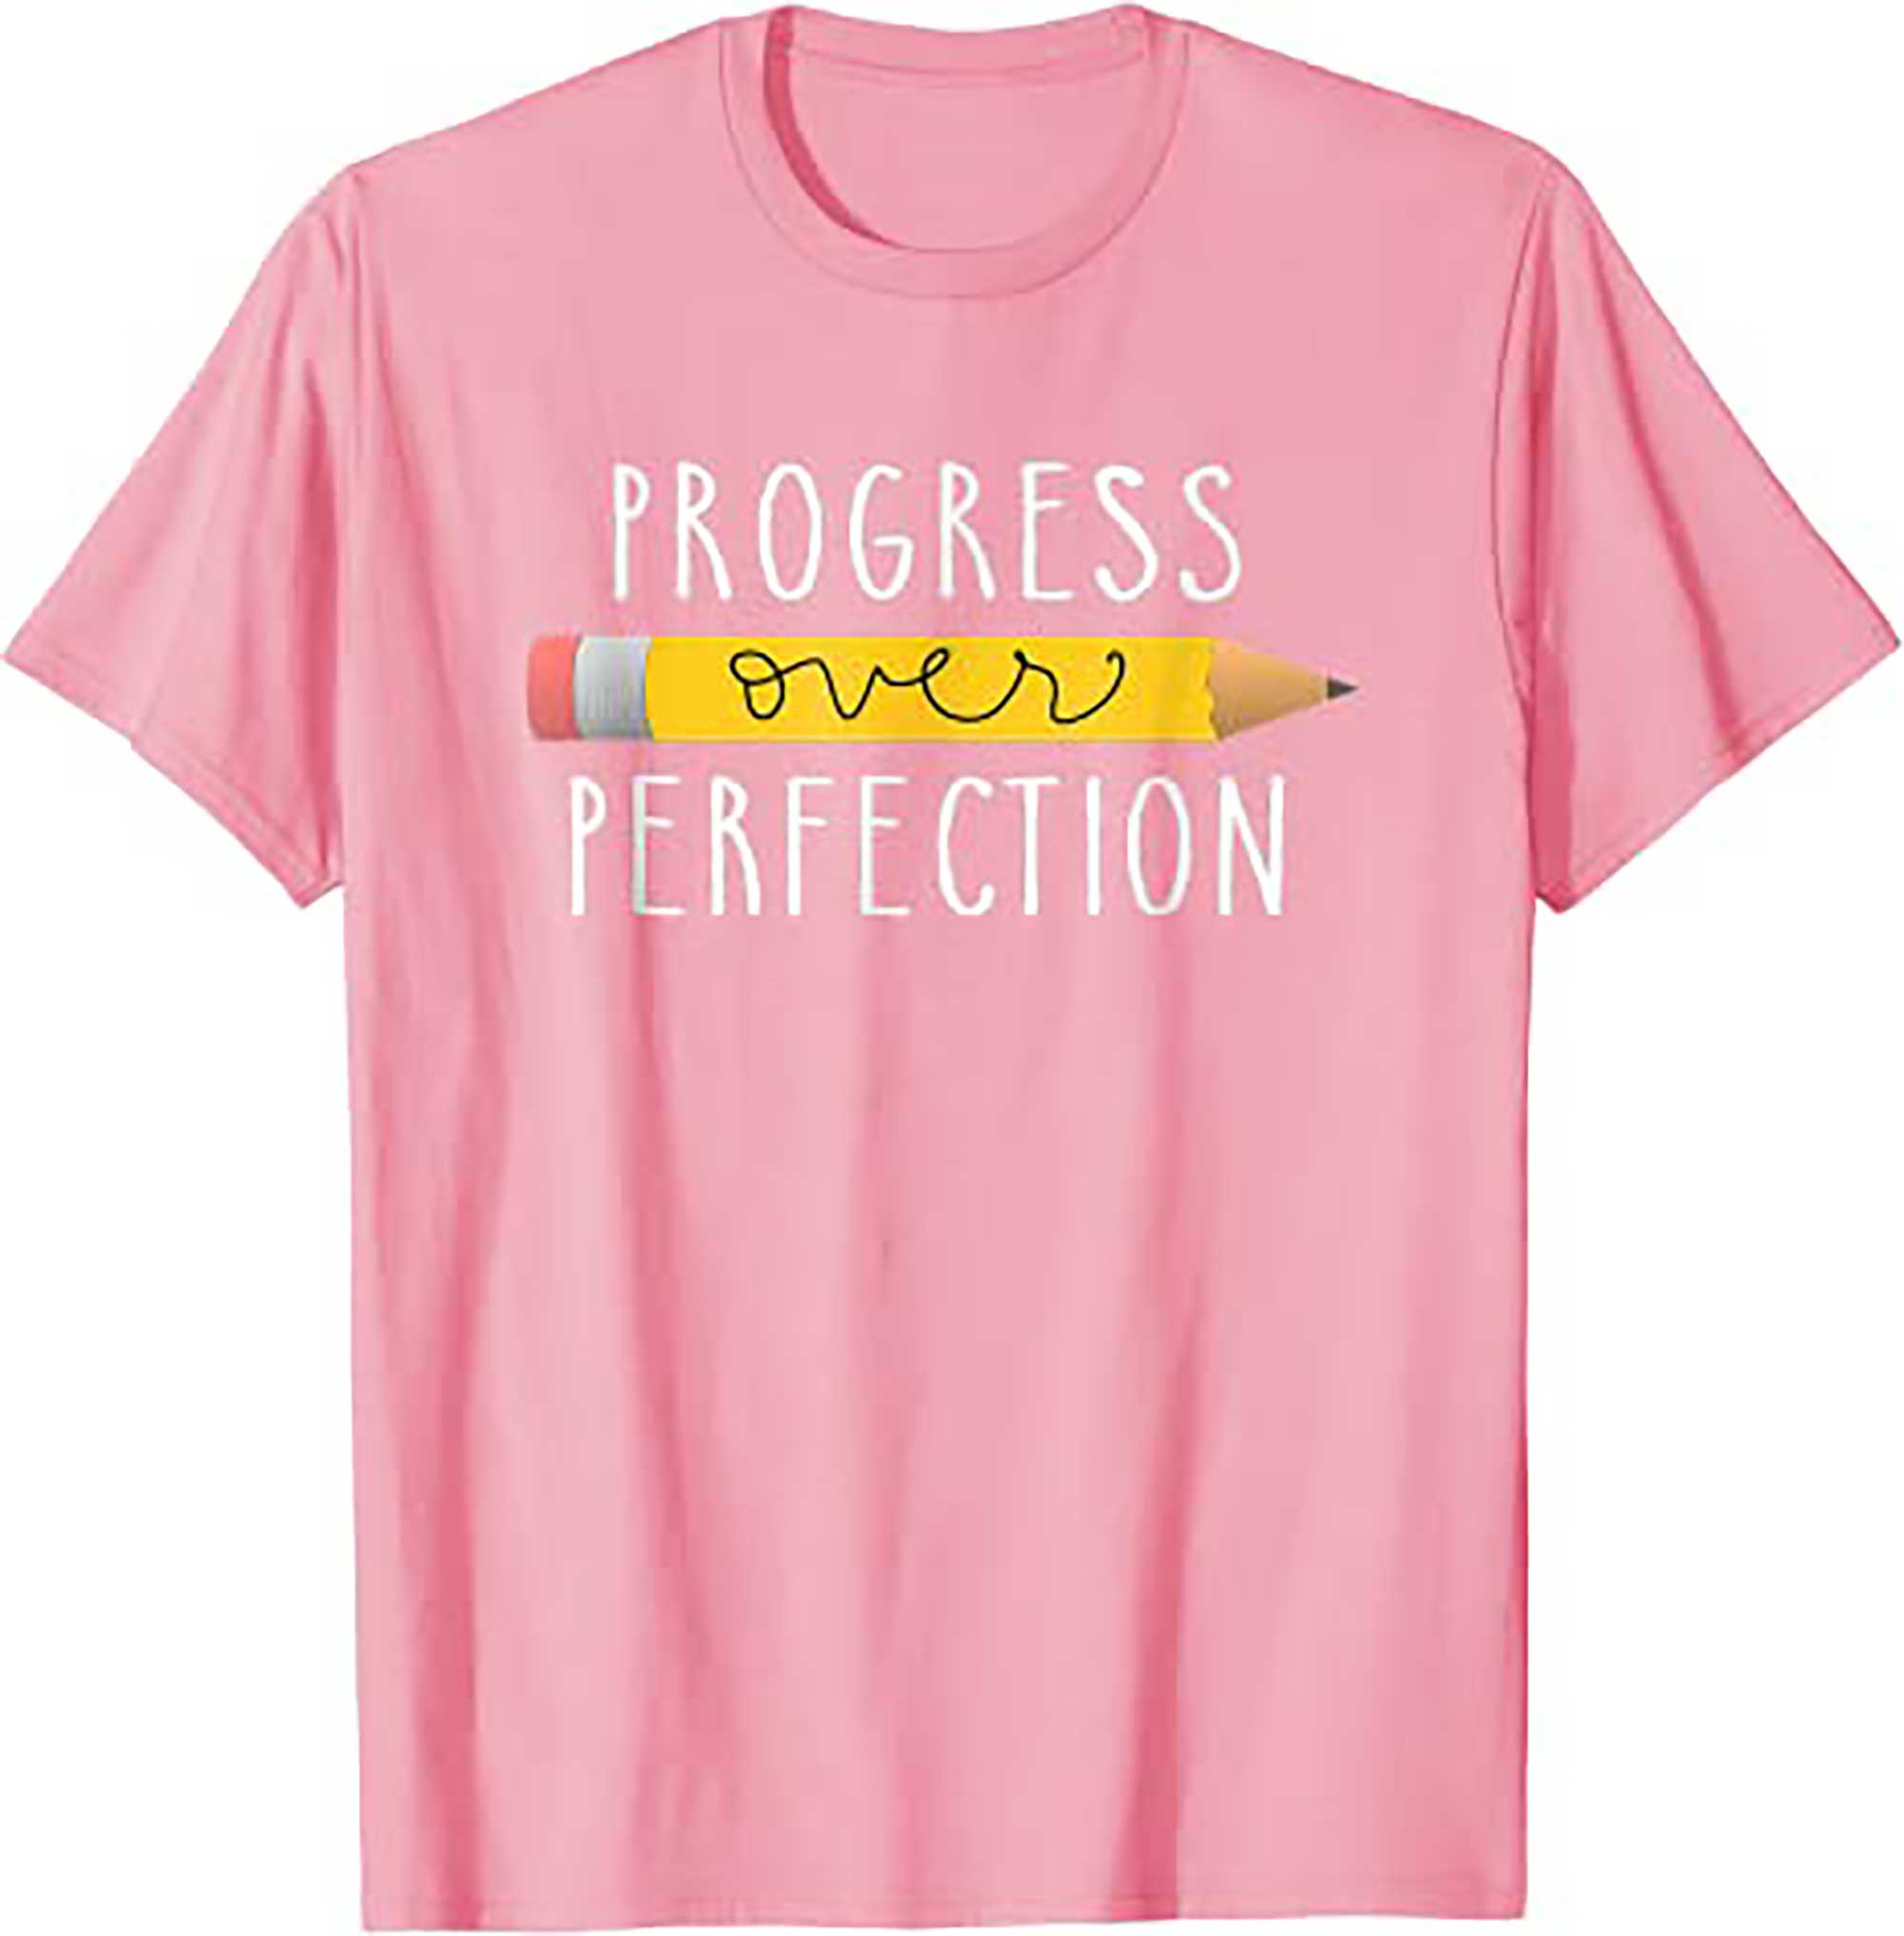 Skitongift Progress Over Perfection Motivational Teacher Tee T Shirt